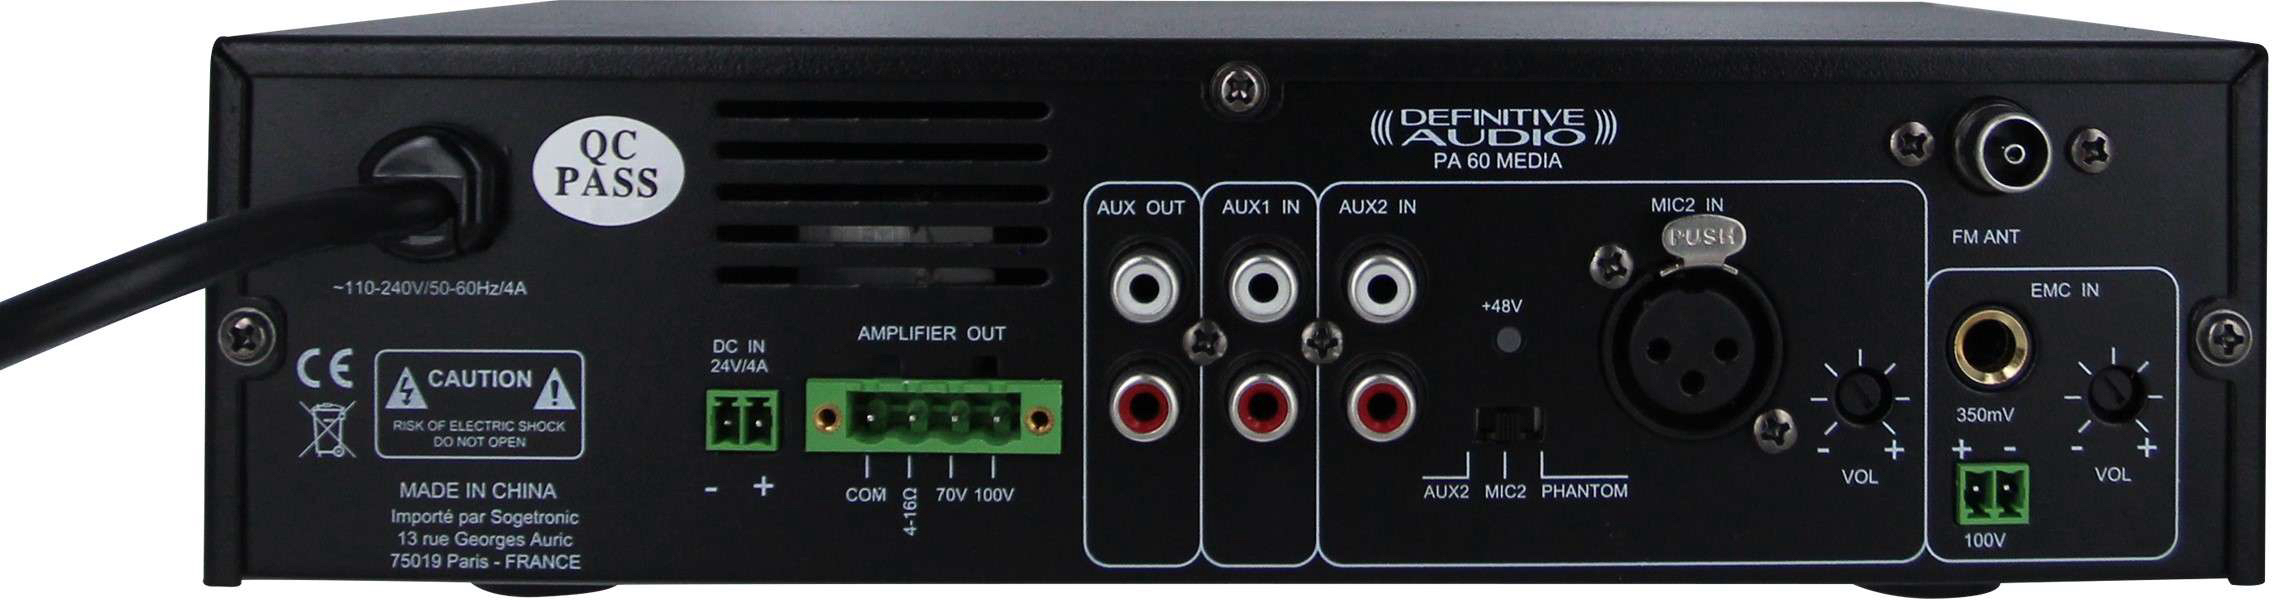 Definitive Audio Pa 60 Media - Multiple channels power amplifier - Variation 1